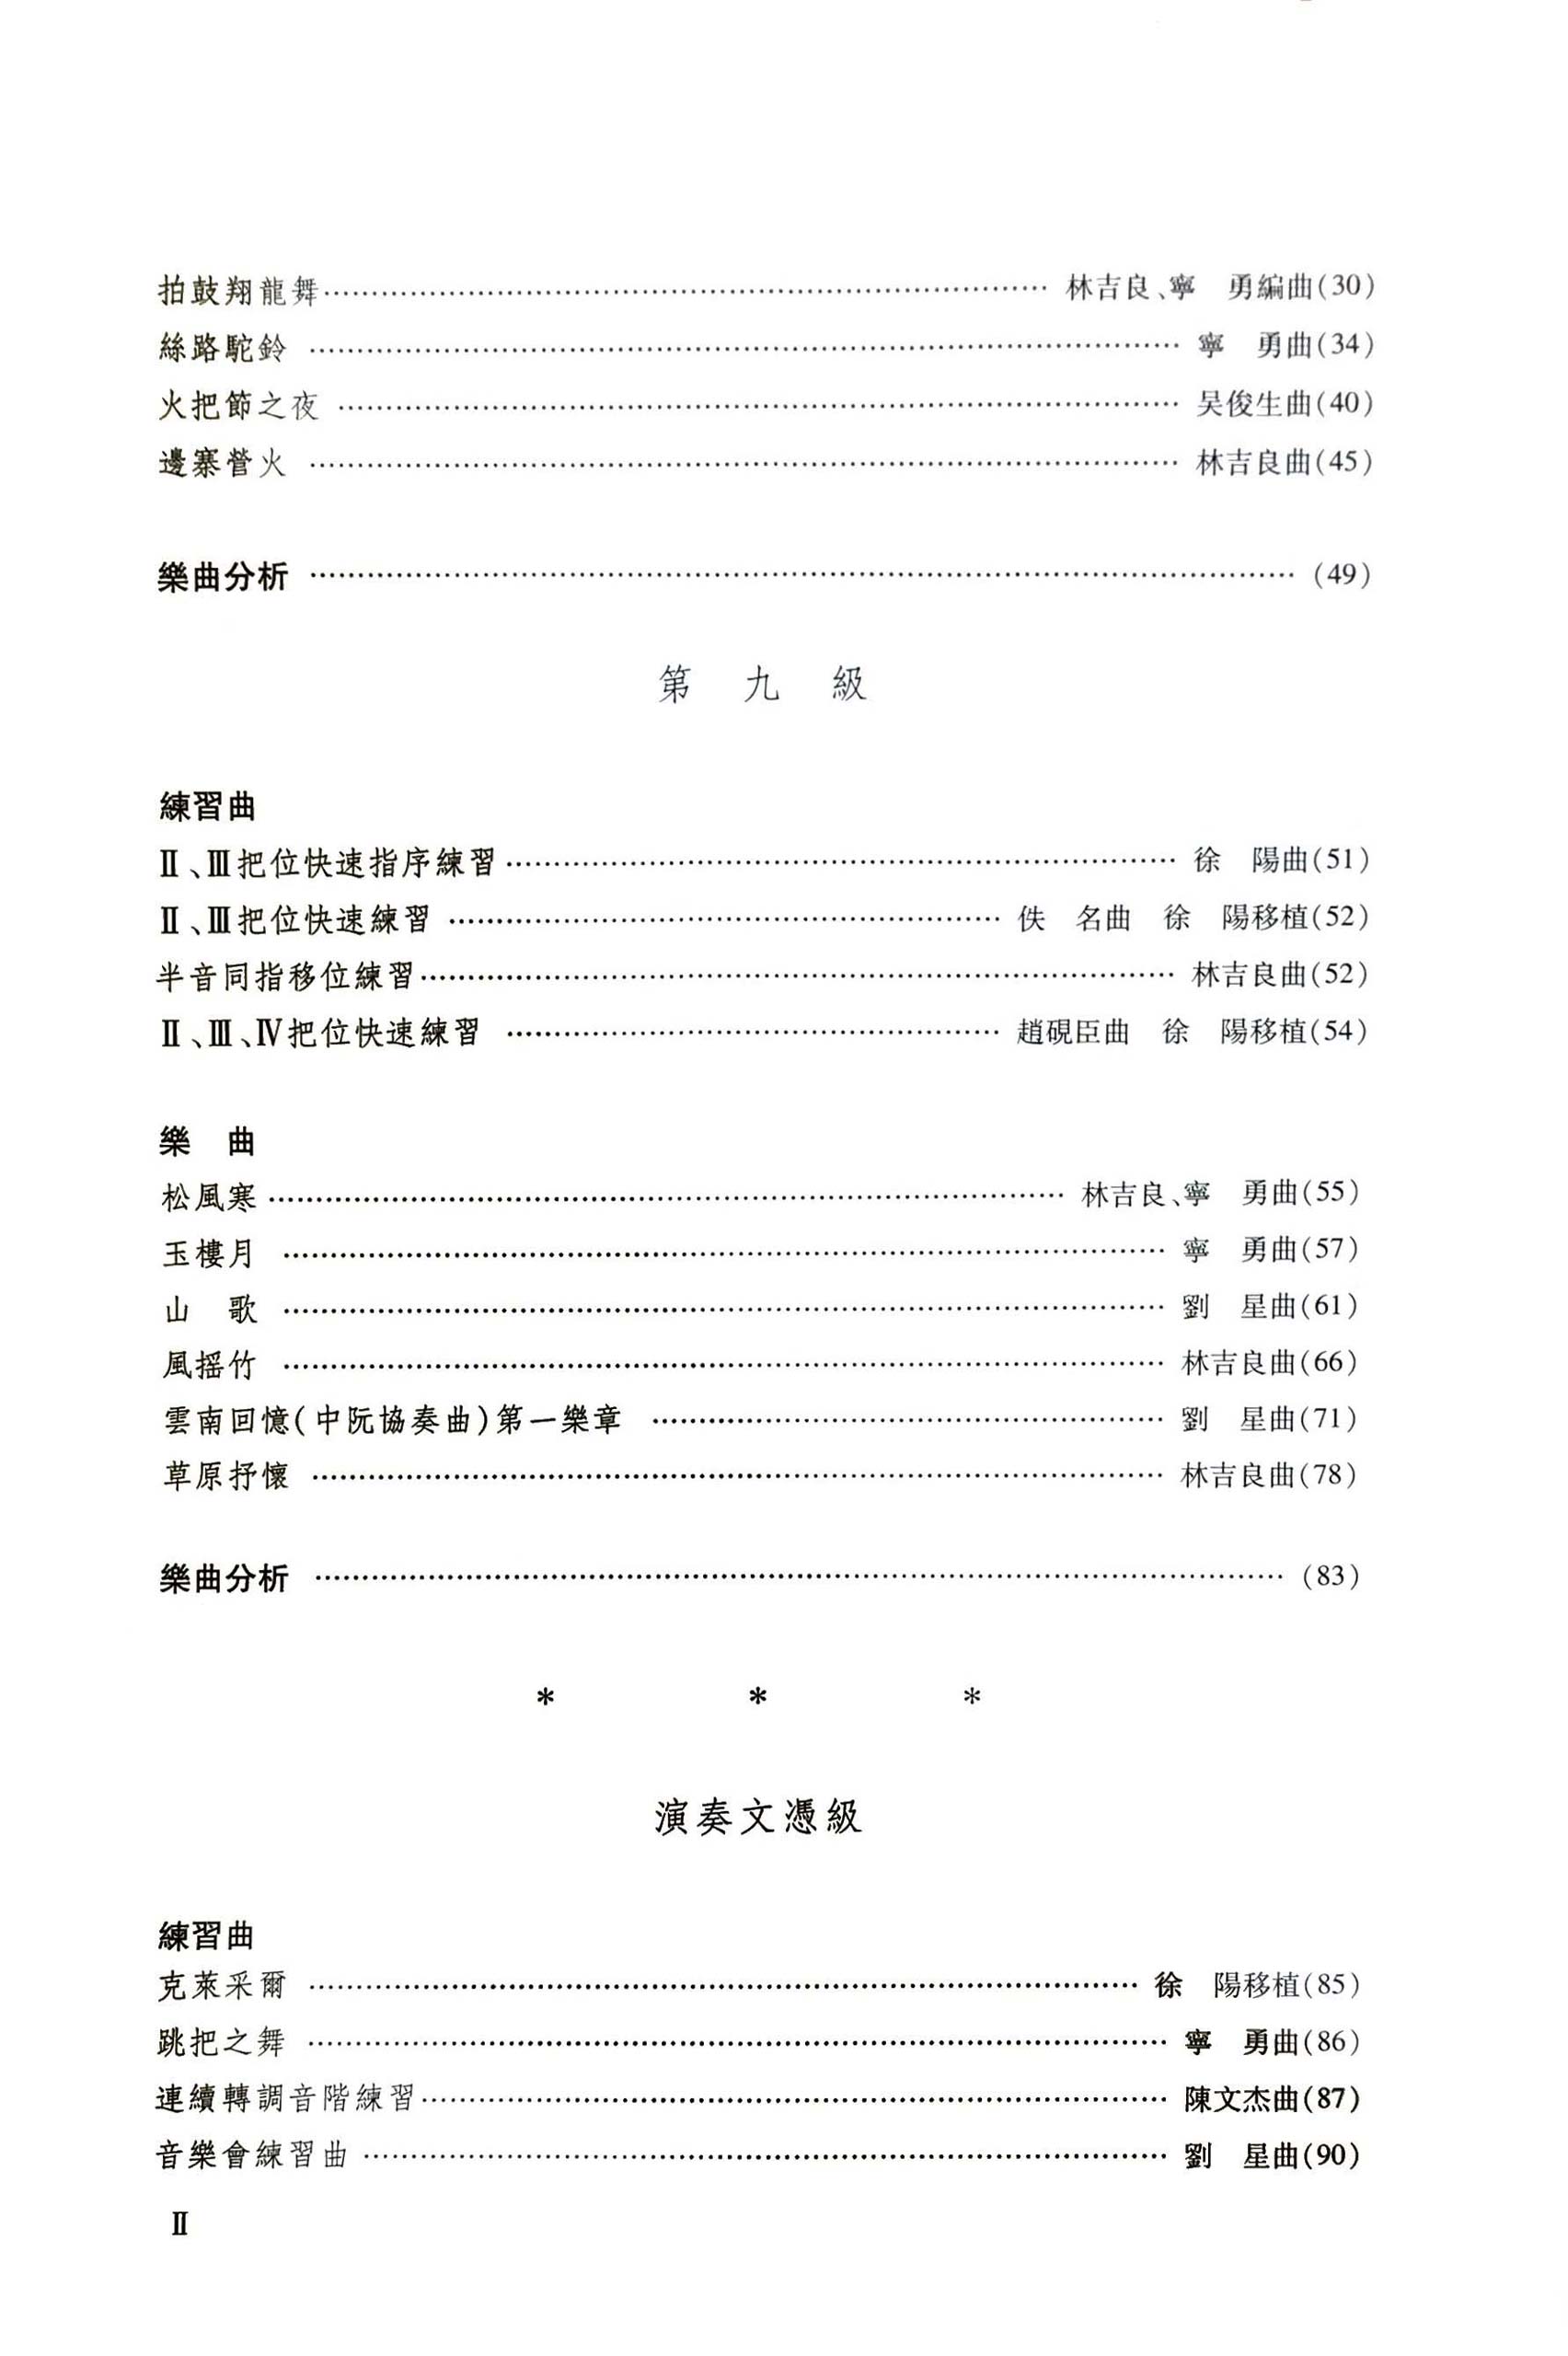 Zhongruan Grading Examination Book by CCOM – NAFA (Beginner Grade 7-Diploma) Content Page 2